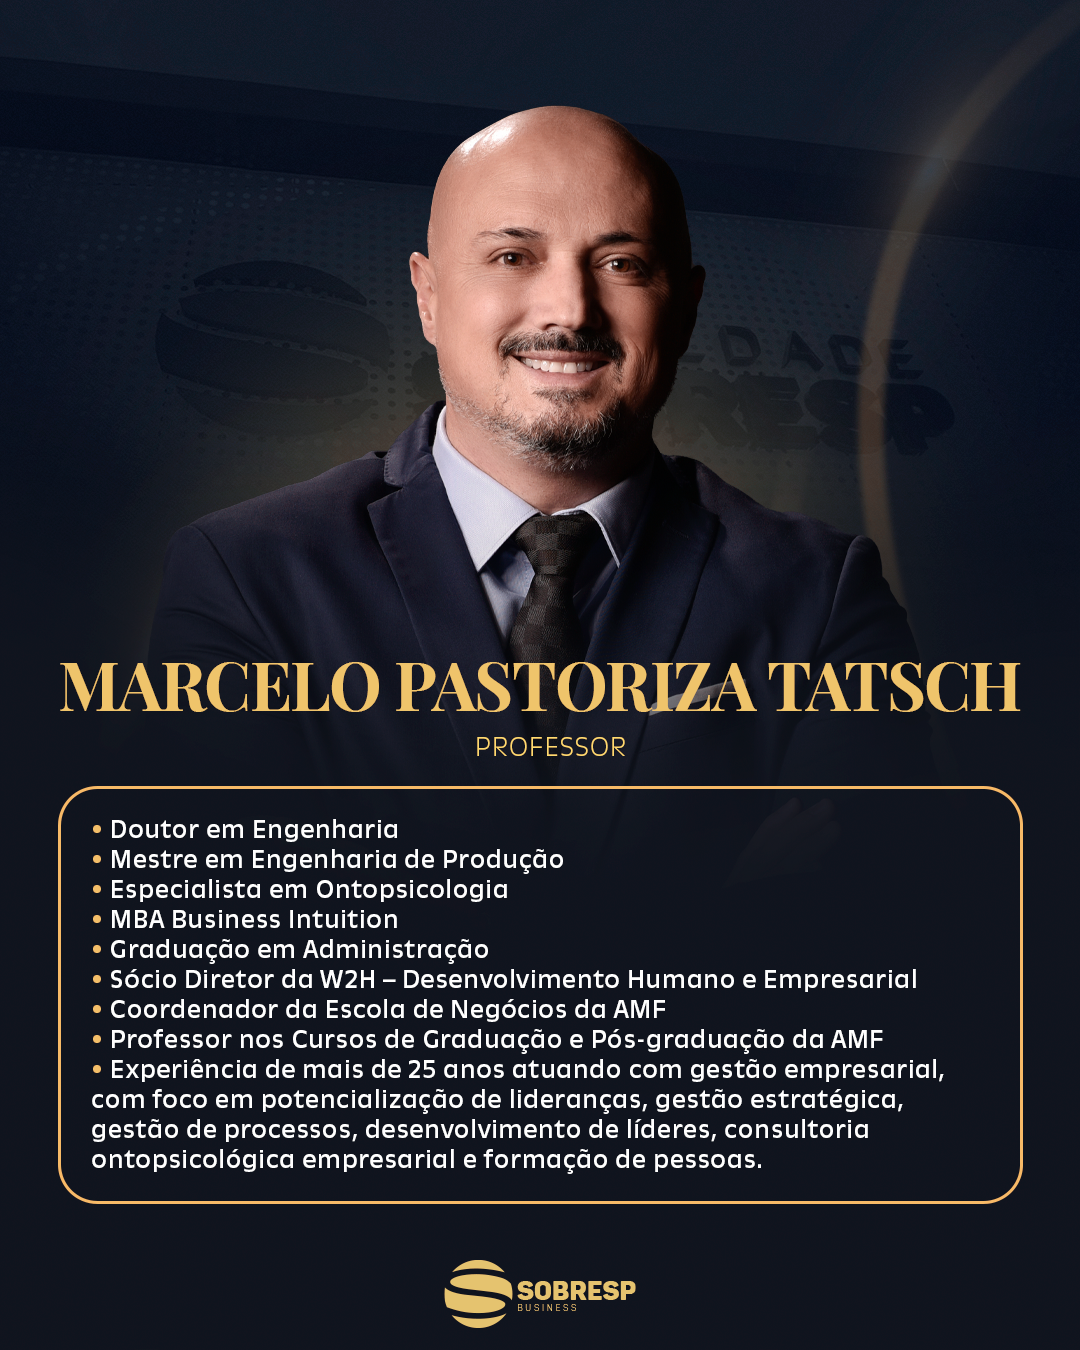 Professor Marcelo Pastoriza Tatsch